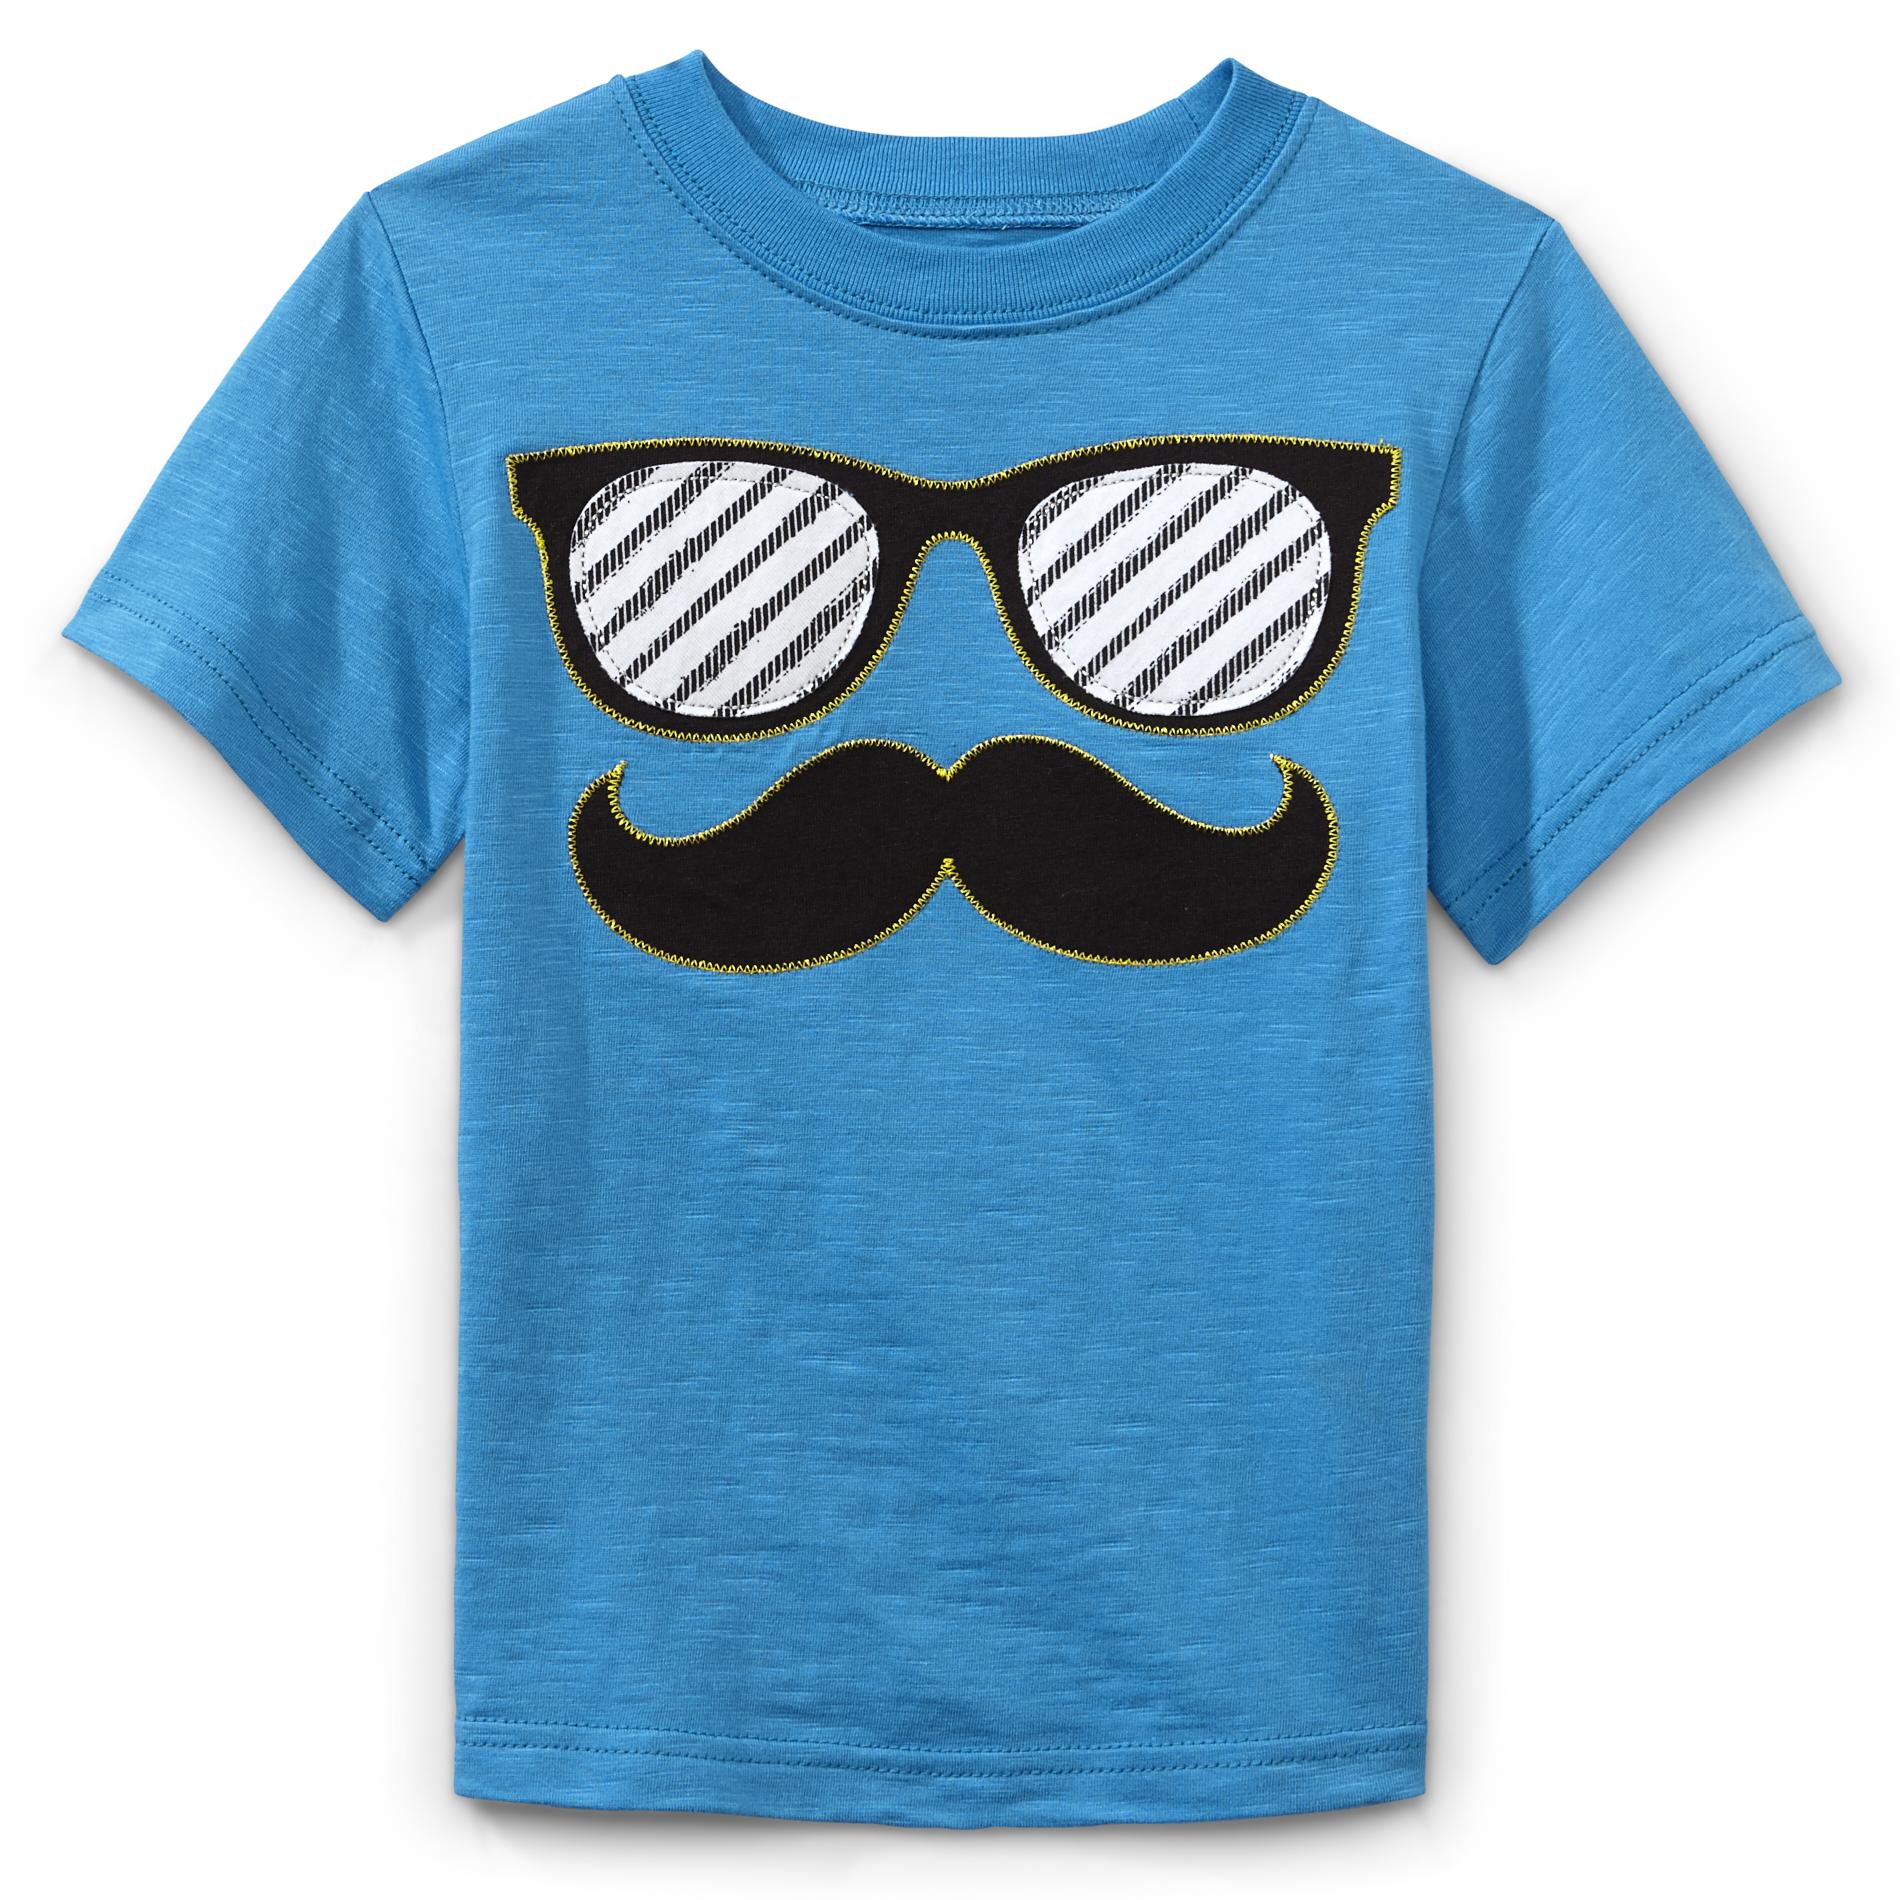 WonderKids Toddler Boy's Short-Sleeve Graphic T-Shirt - Mustache & Glasses